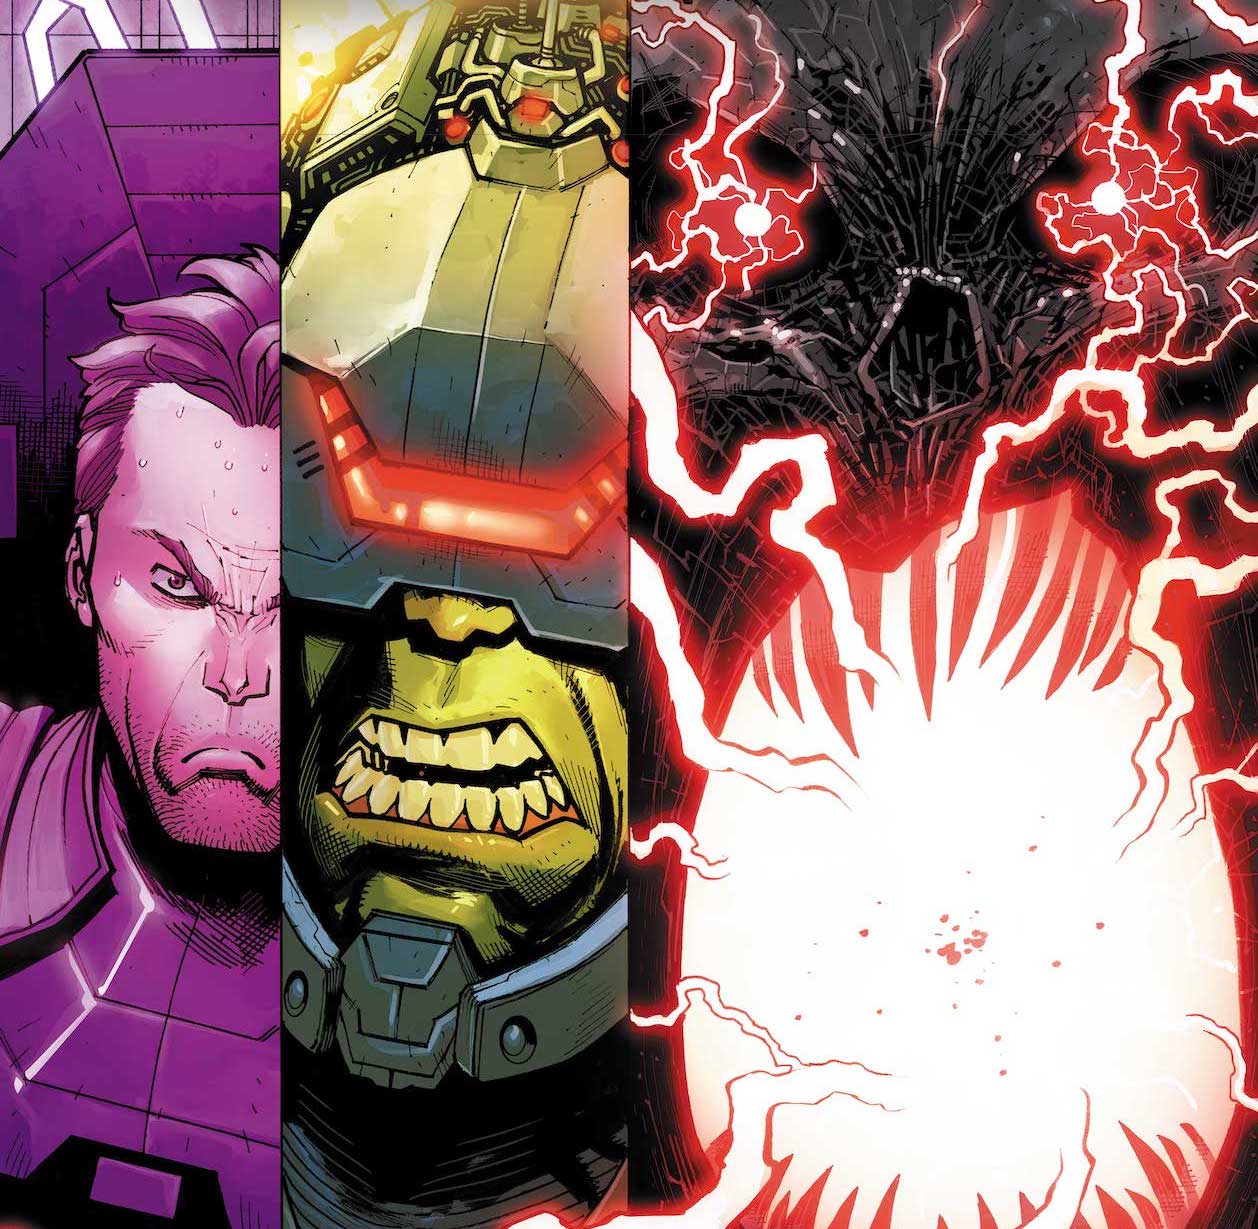 Marvel's 'Hulk' #6 to feature 'Deadliest Hulk' Titan in April